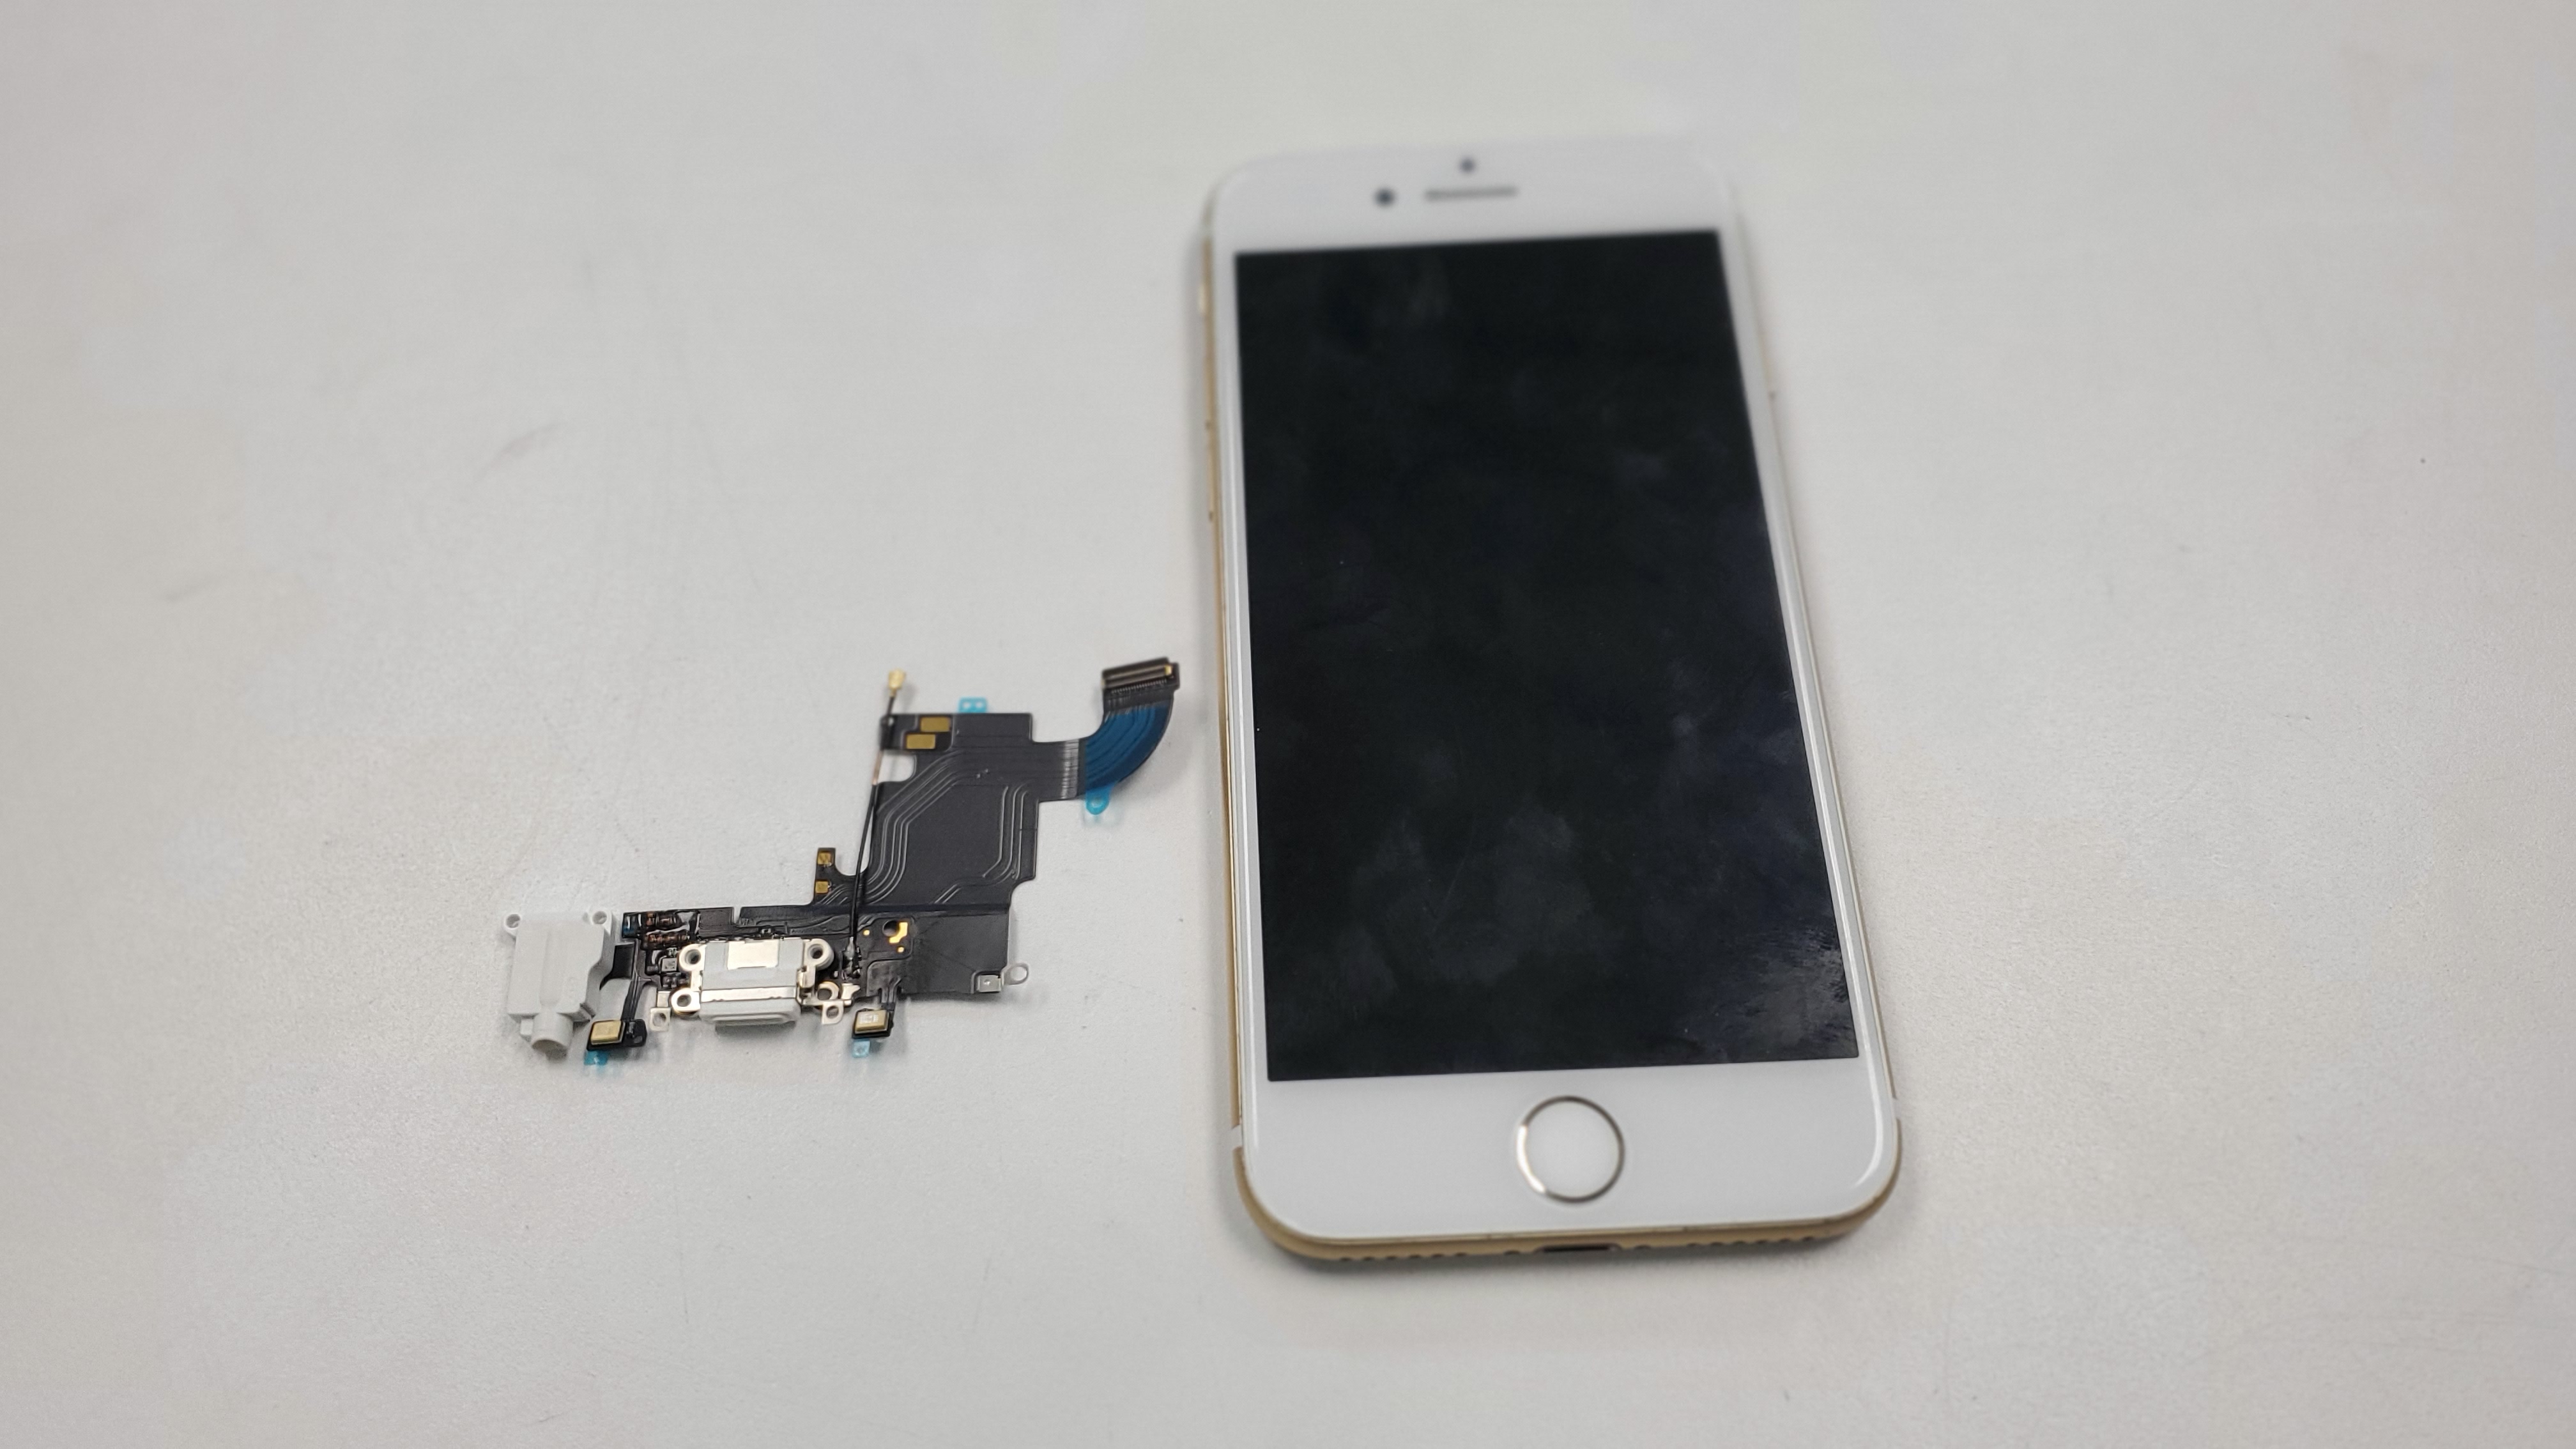 iphone charging port replacement fix at ifixdallas plano ifix iphone repair dallas